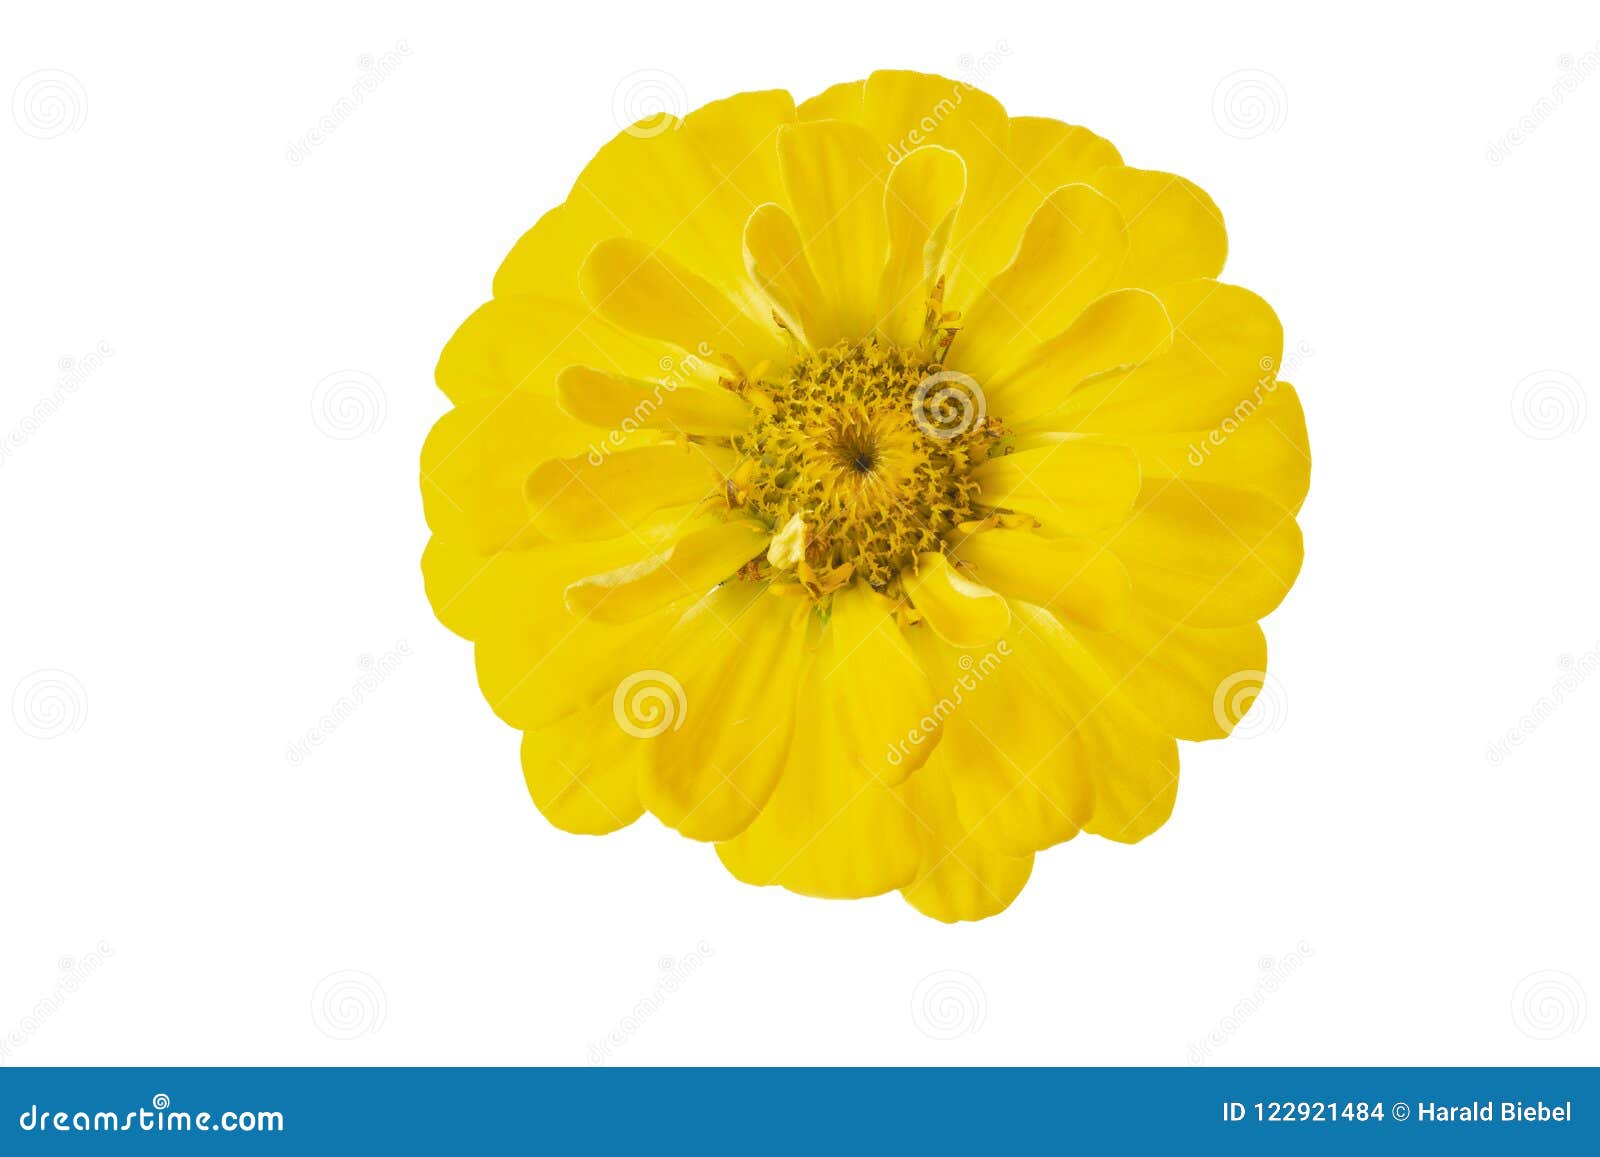 yellow zinnia zinnia violacea flower head